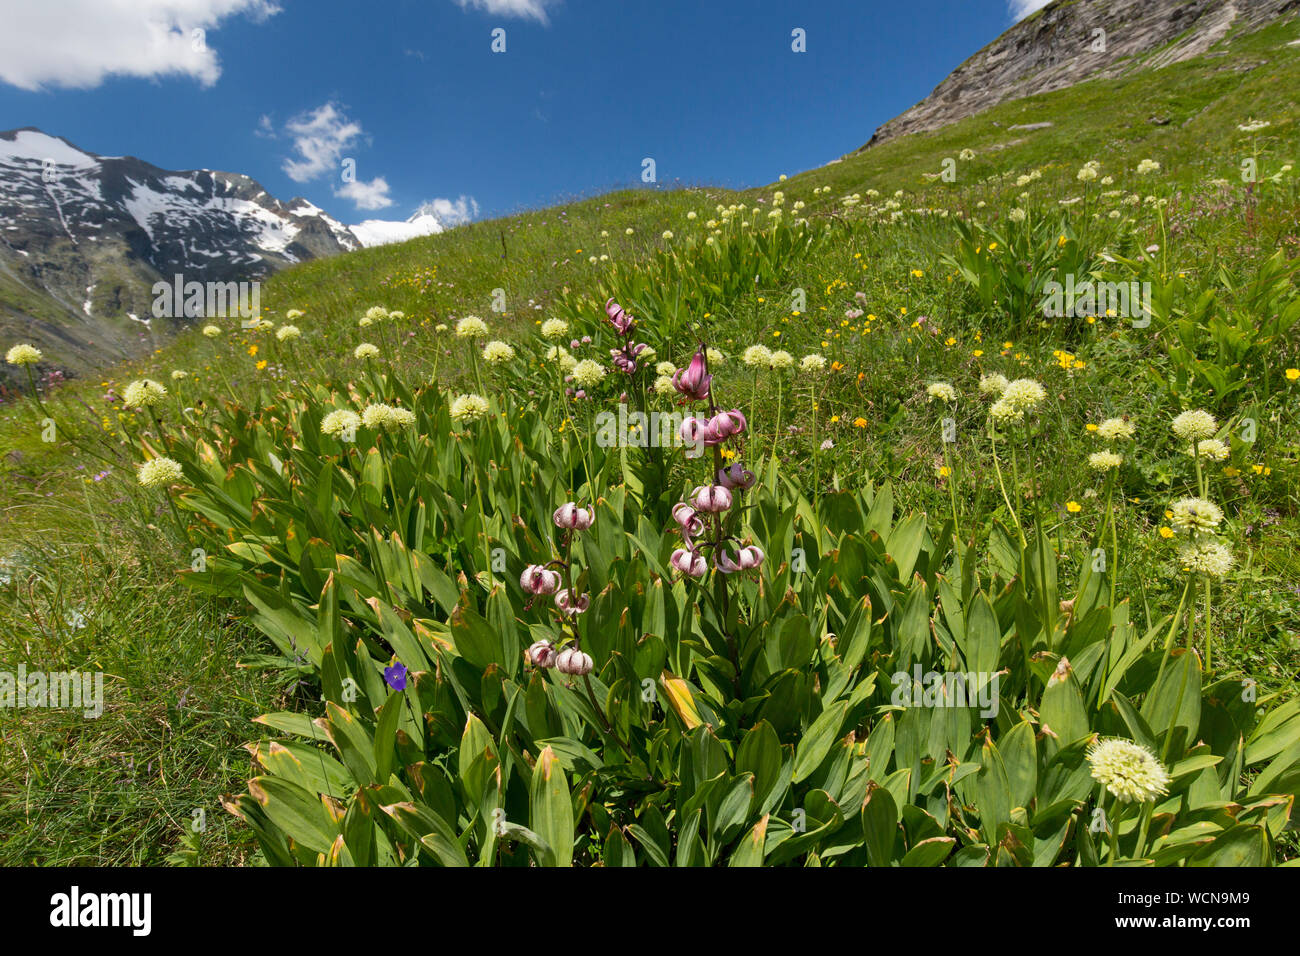 Victory onion / Alpine leek / Alpine broad-leaf allium (Allium victorialis) and martagon lily / Turk's cap lily (Lilium martagon) in flower, Austria Stock Photo